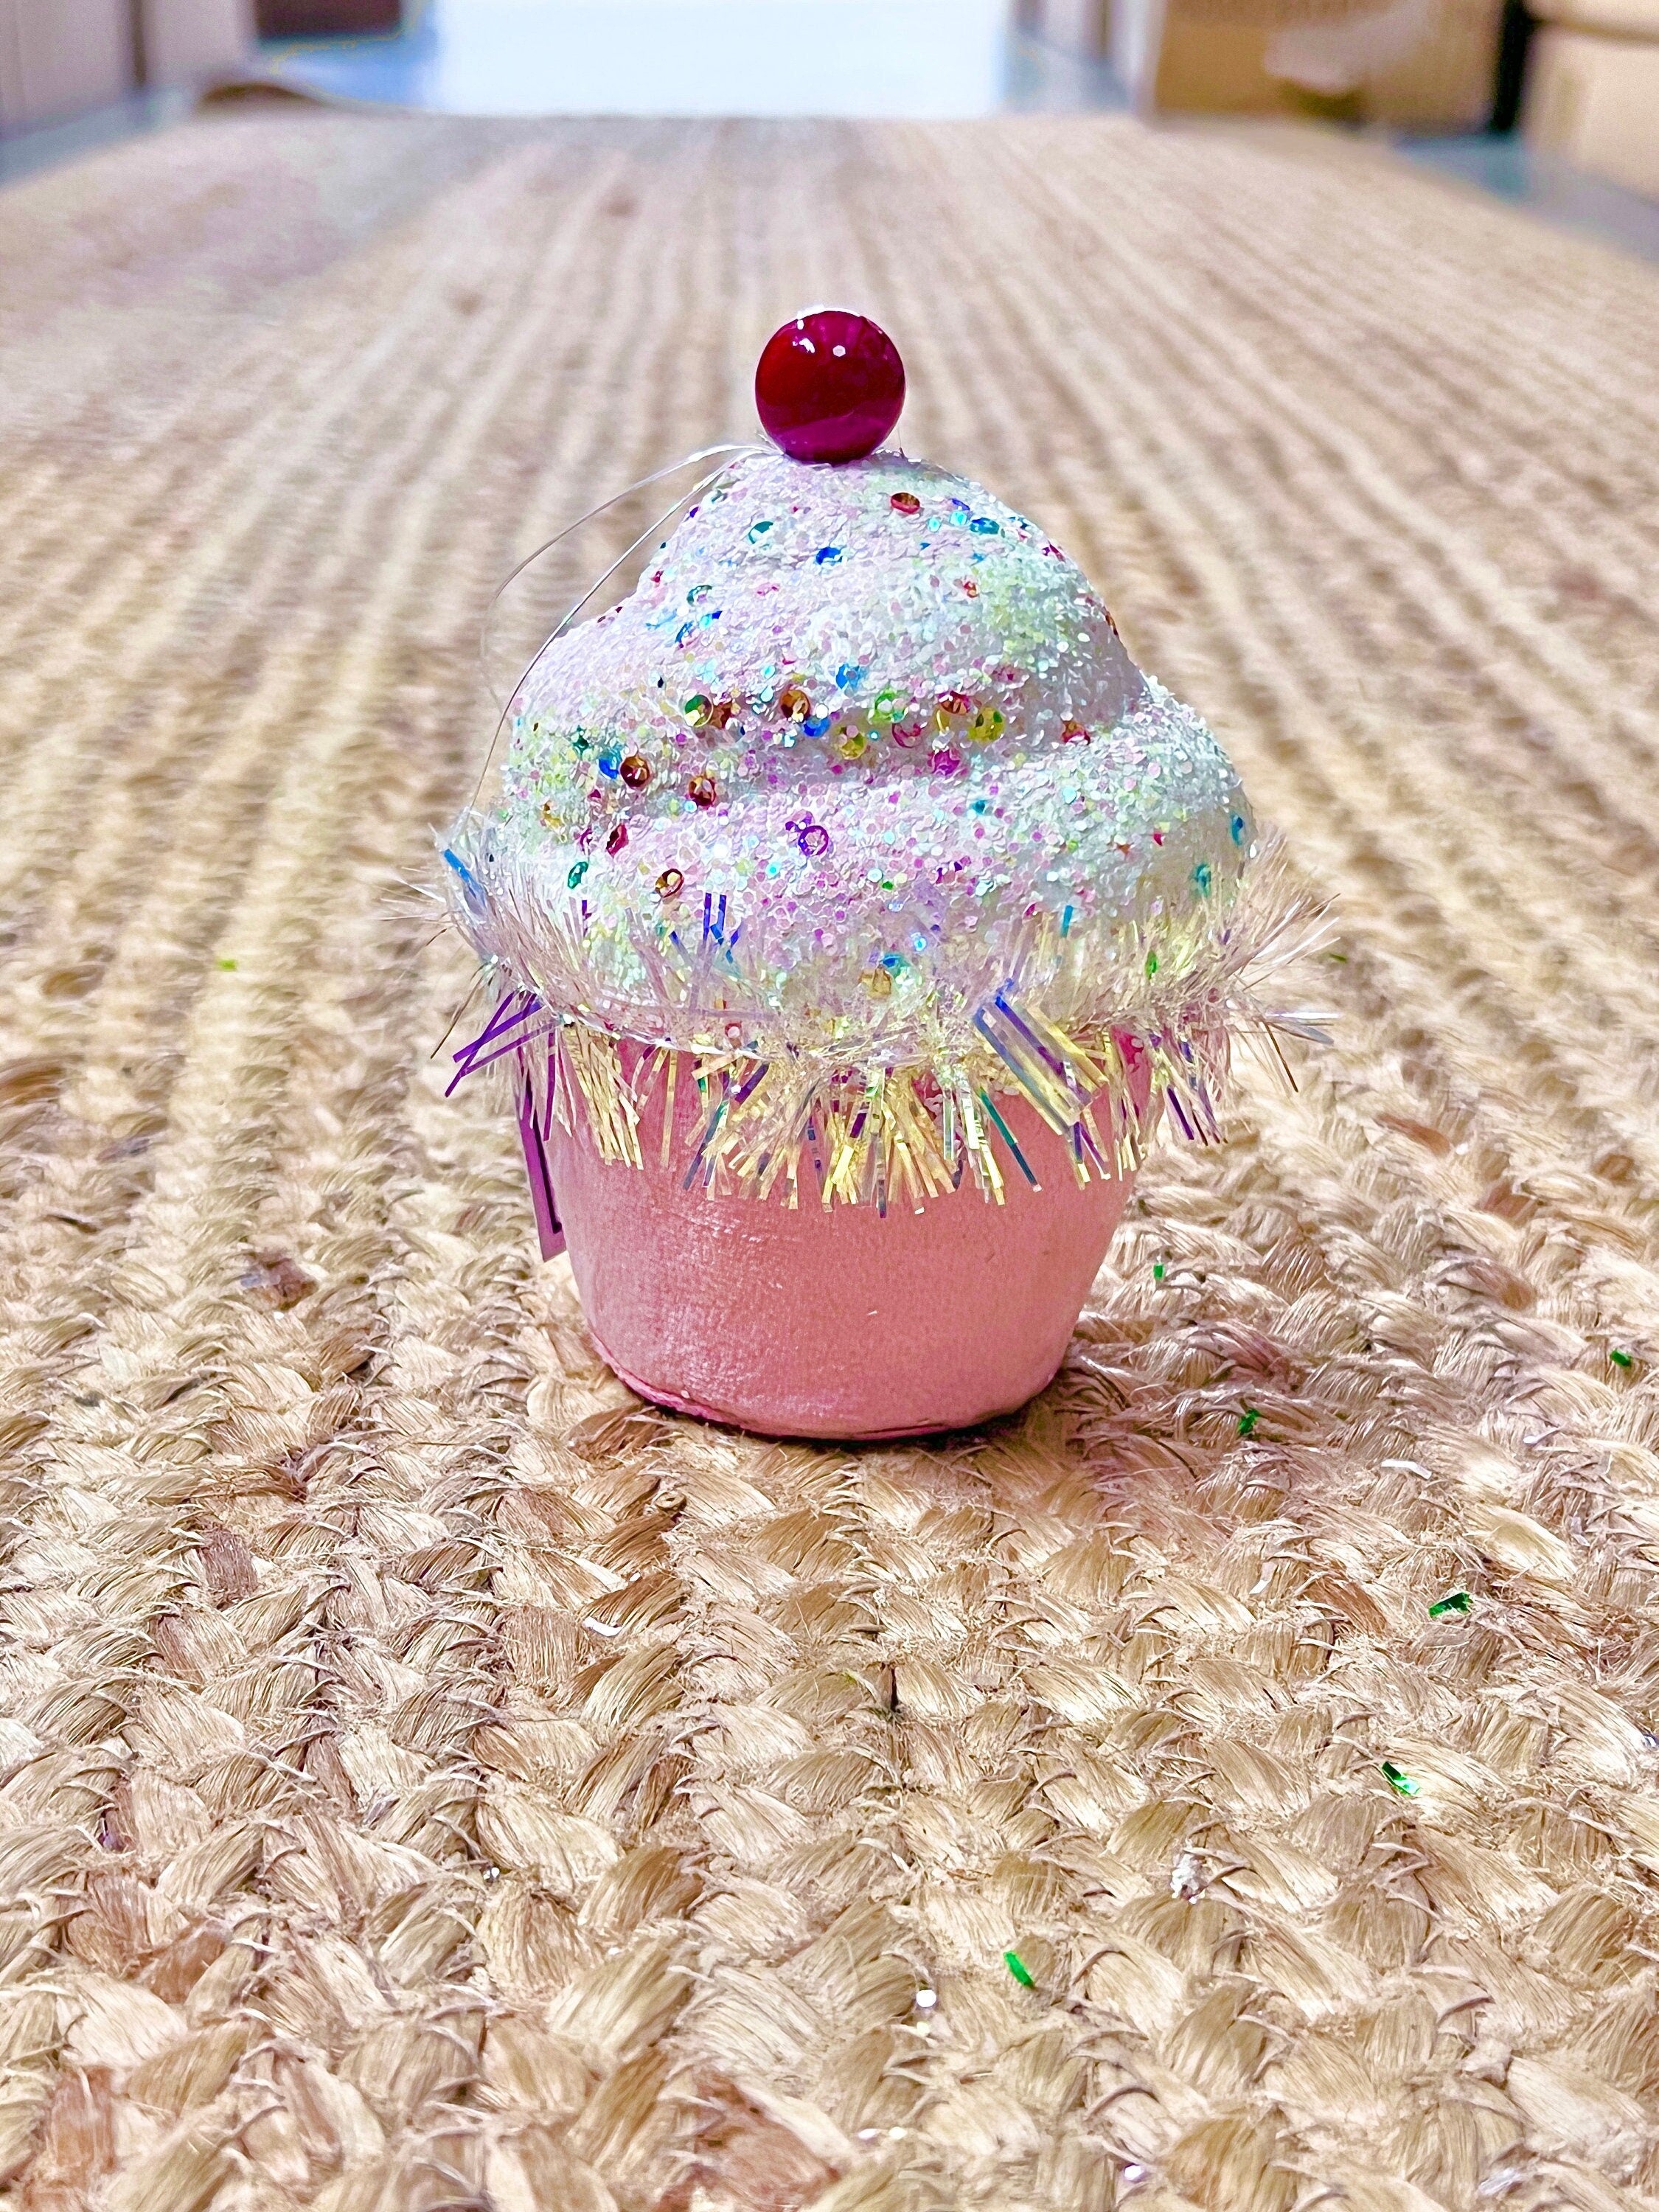 5 Inch Pink Sprinkle & Tinsel Cupcake Ornament